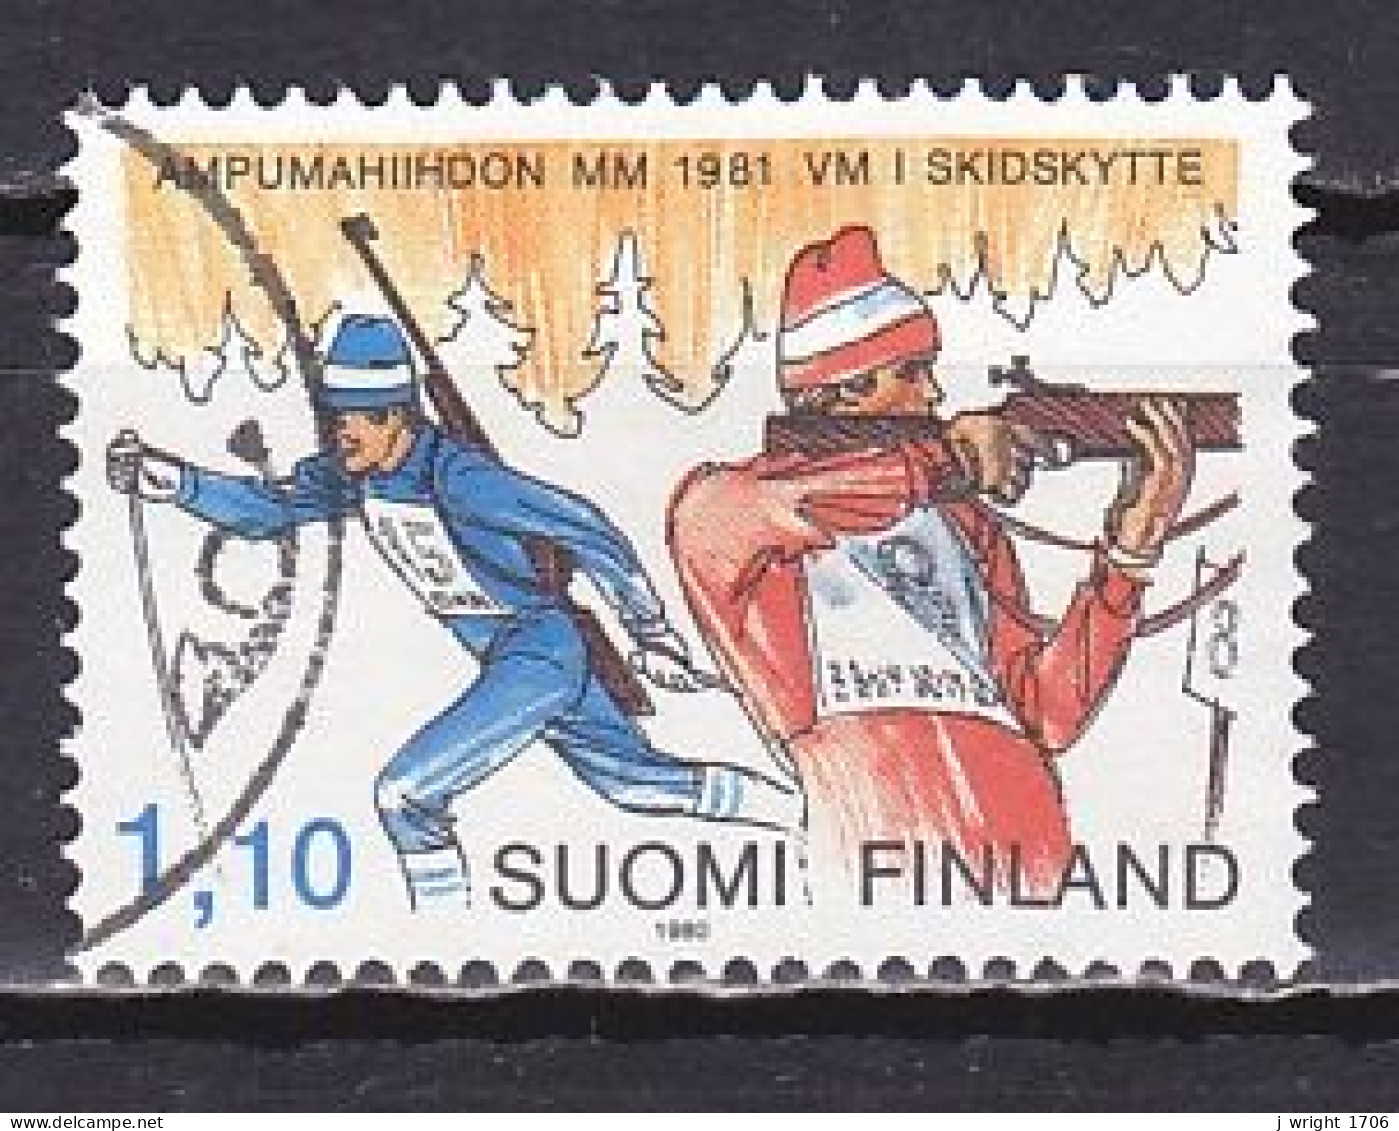 Finland, 1980, World Biathlon Championships, 1.10mk, USED - Usati